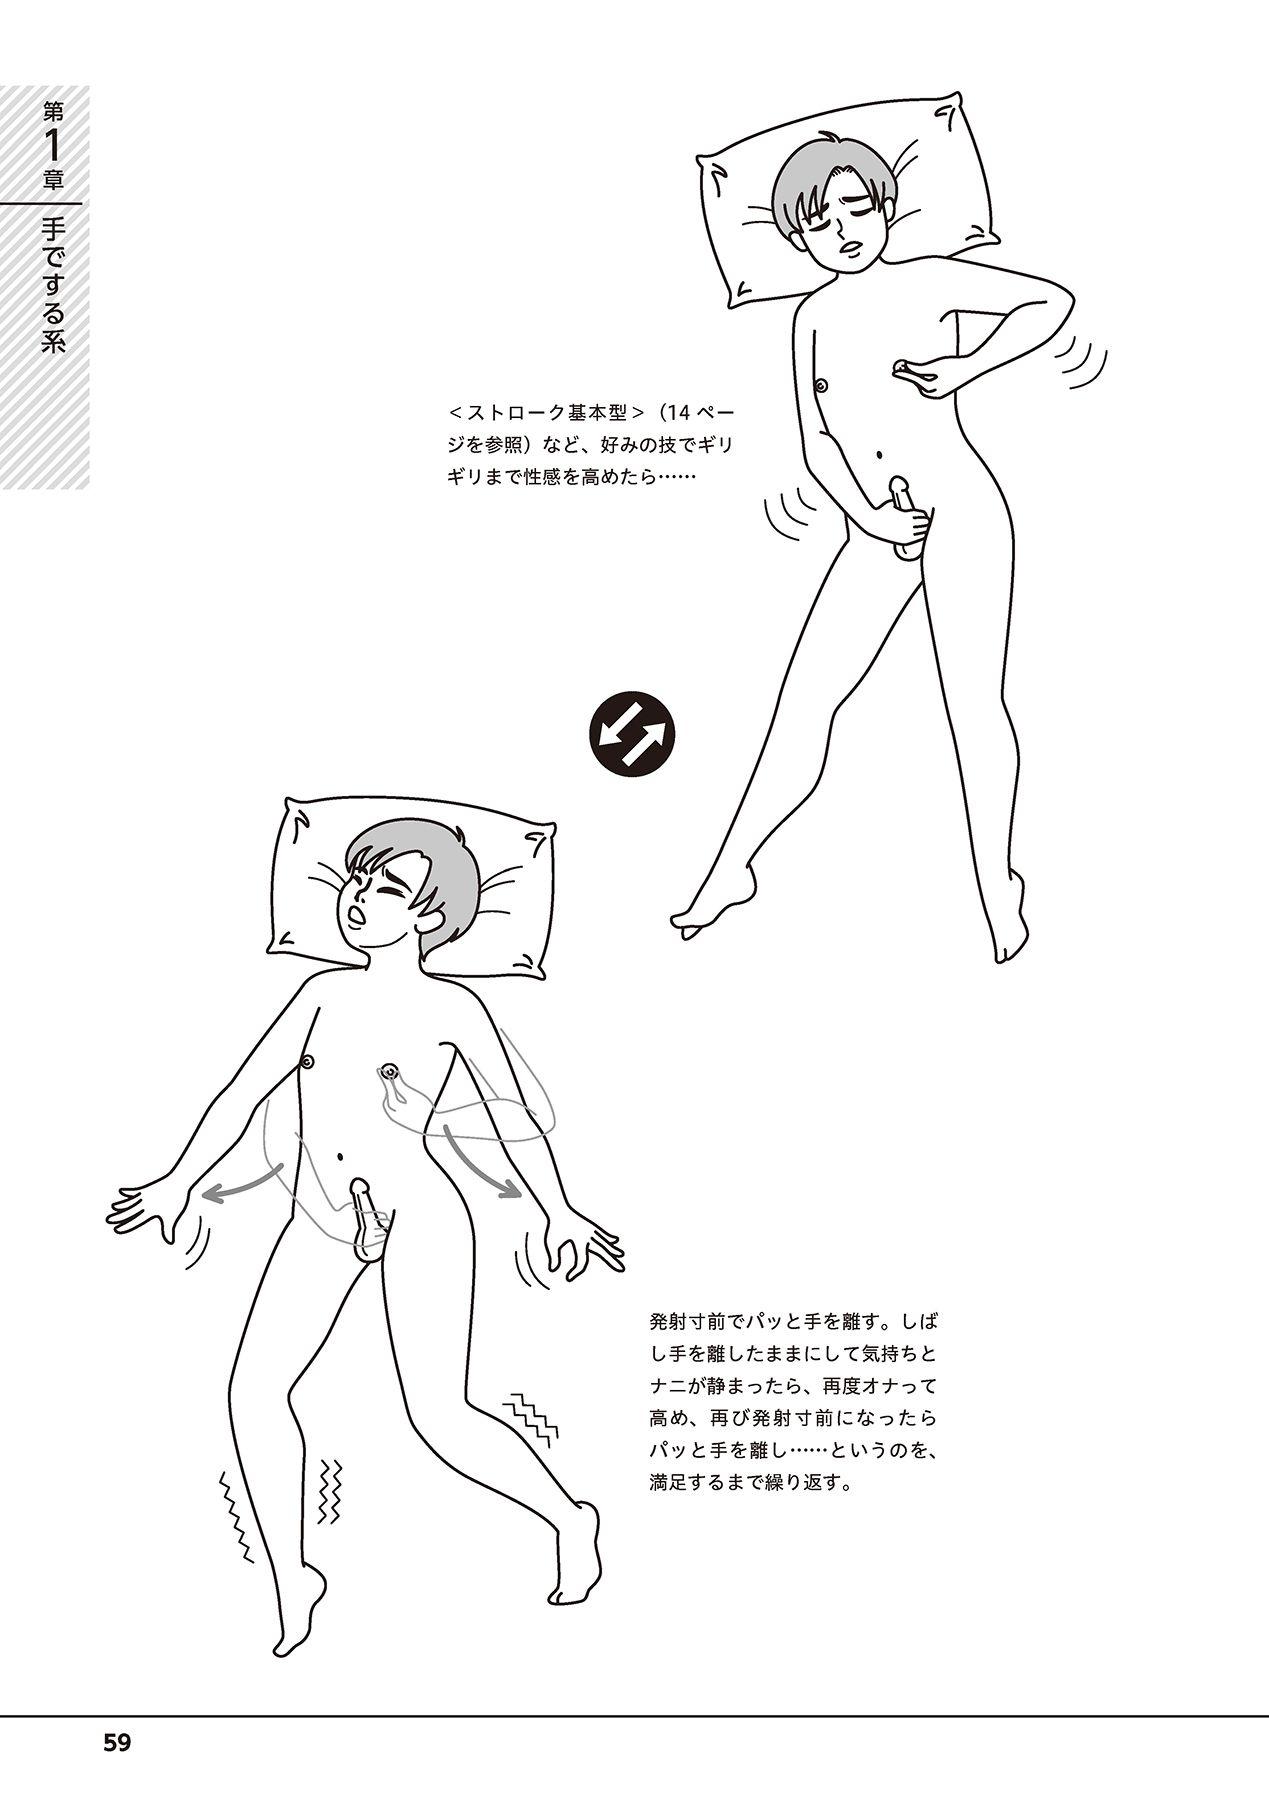 Otoko no Jii Onanie Kanzen Manual Illustration Han...... Onanie Play 60